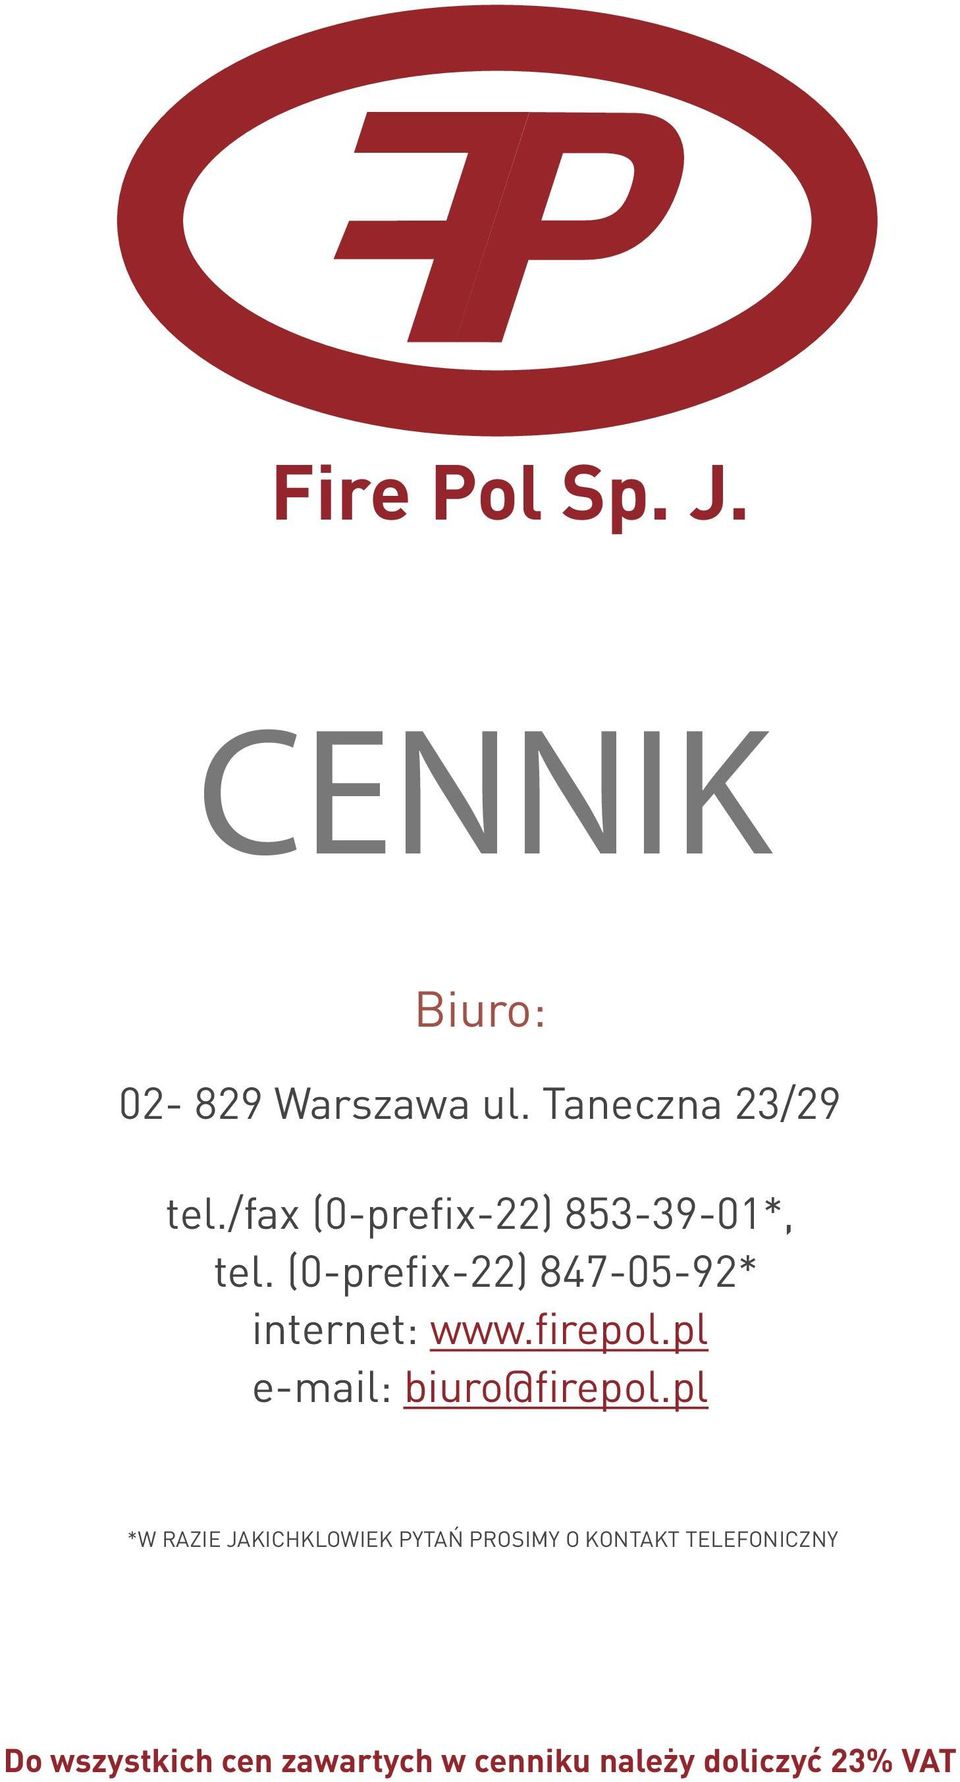 firepol.pl e-mail: biuro@firepol.